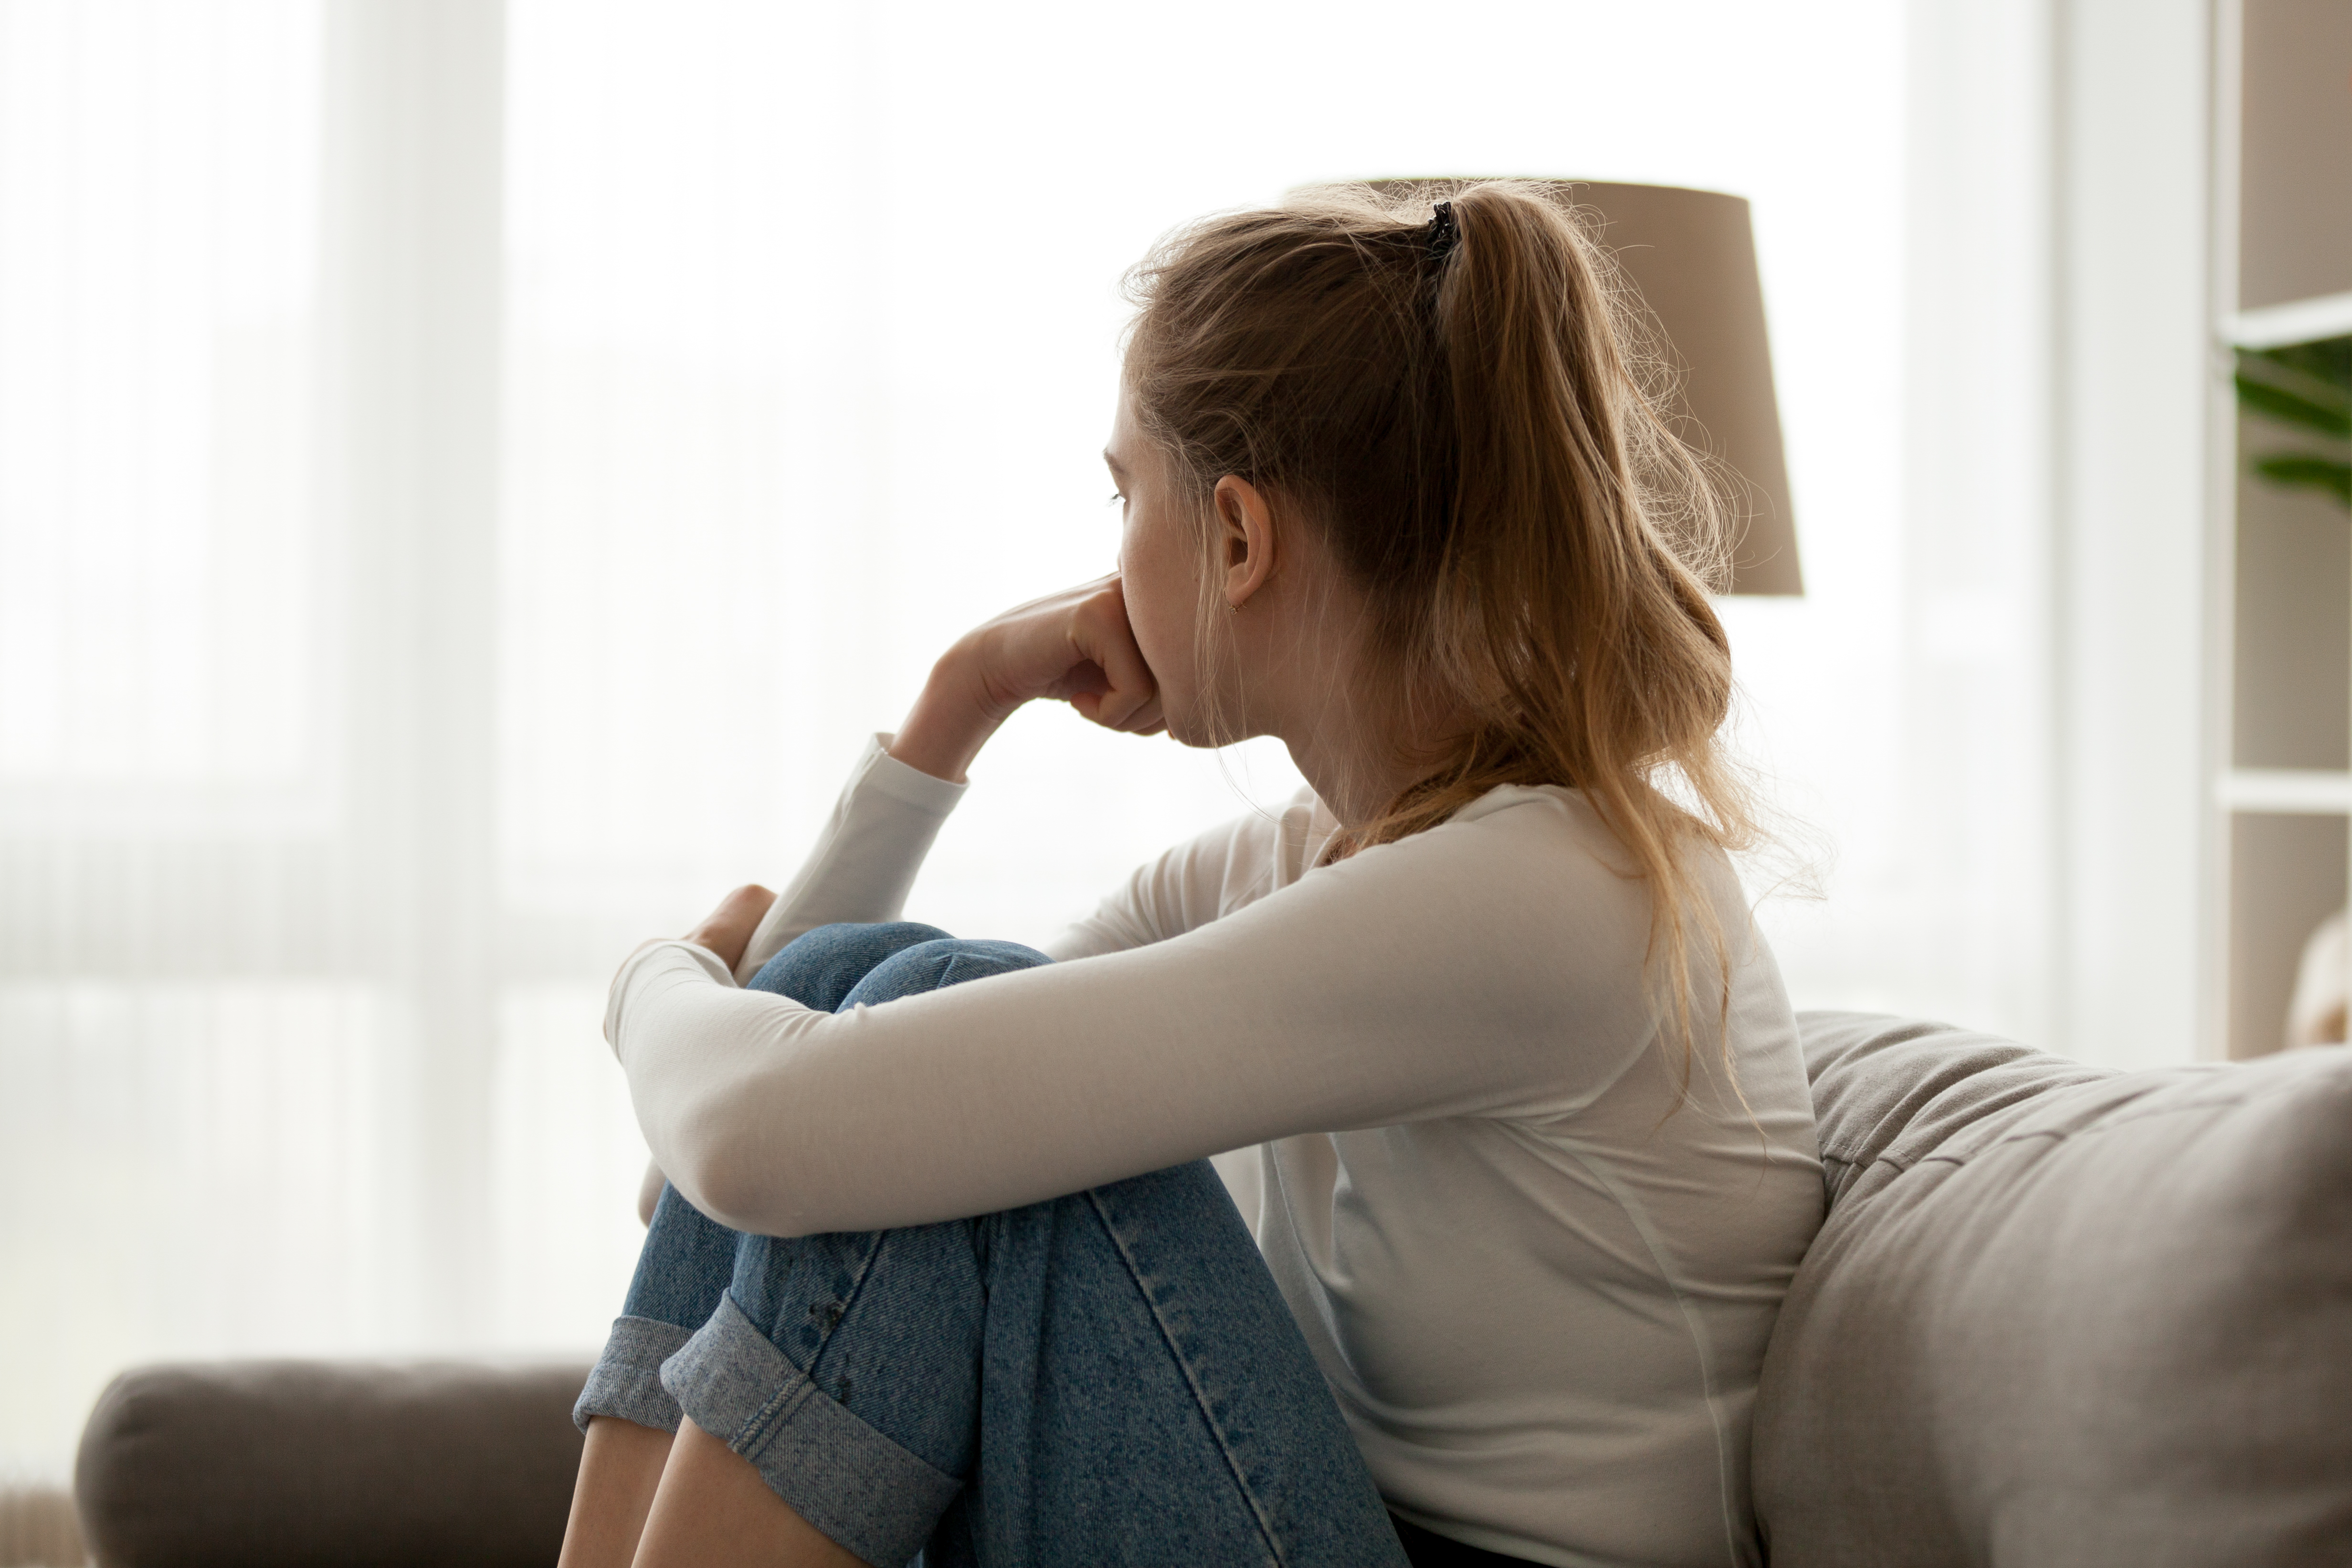 Femme triste assise seule | Source : Shutterstock